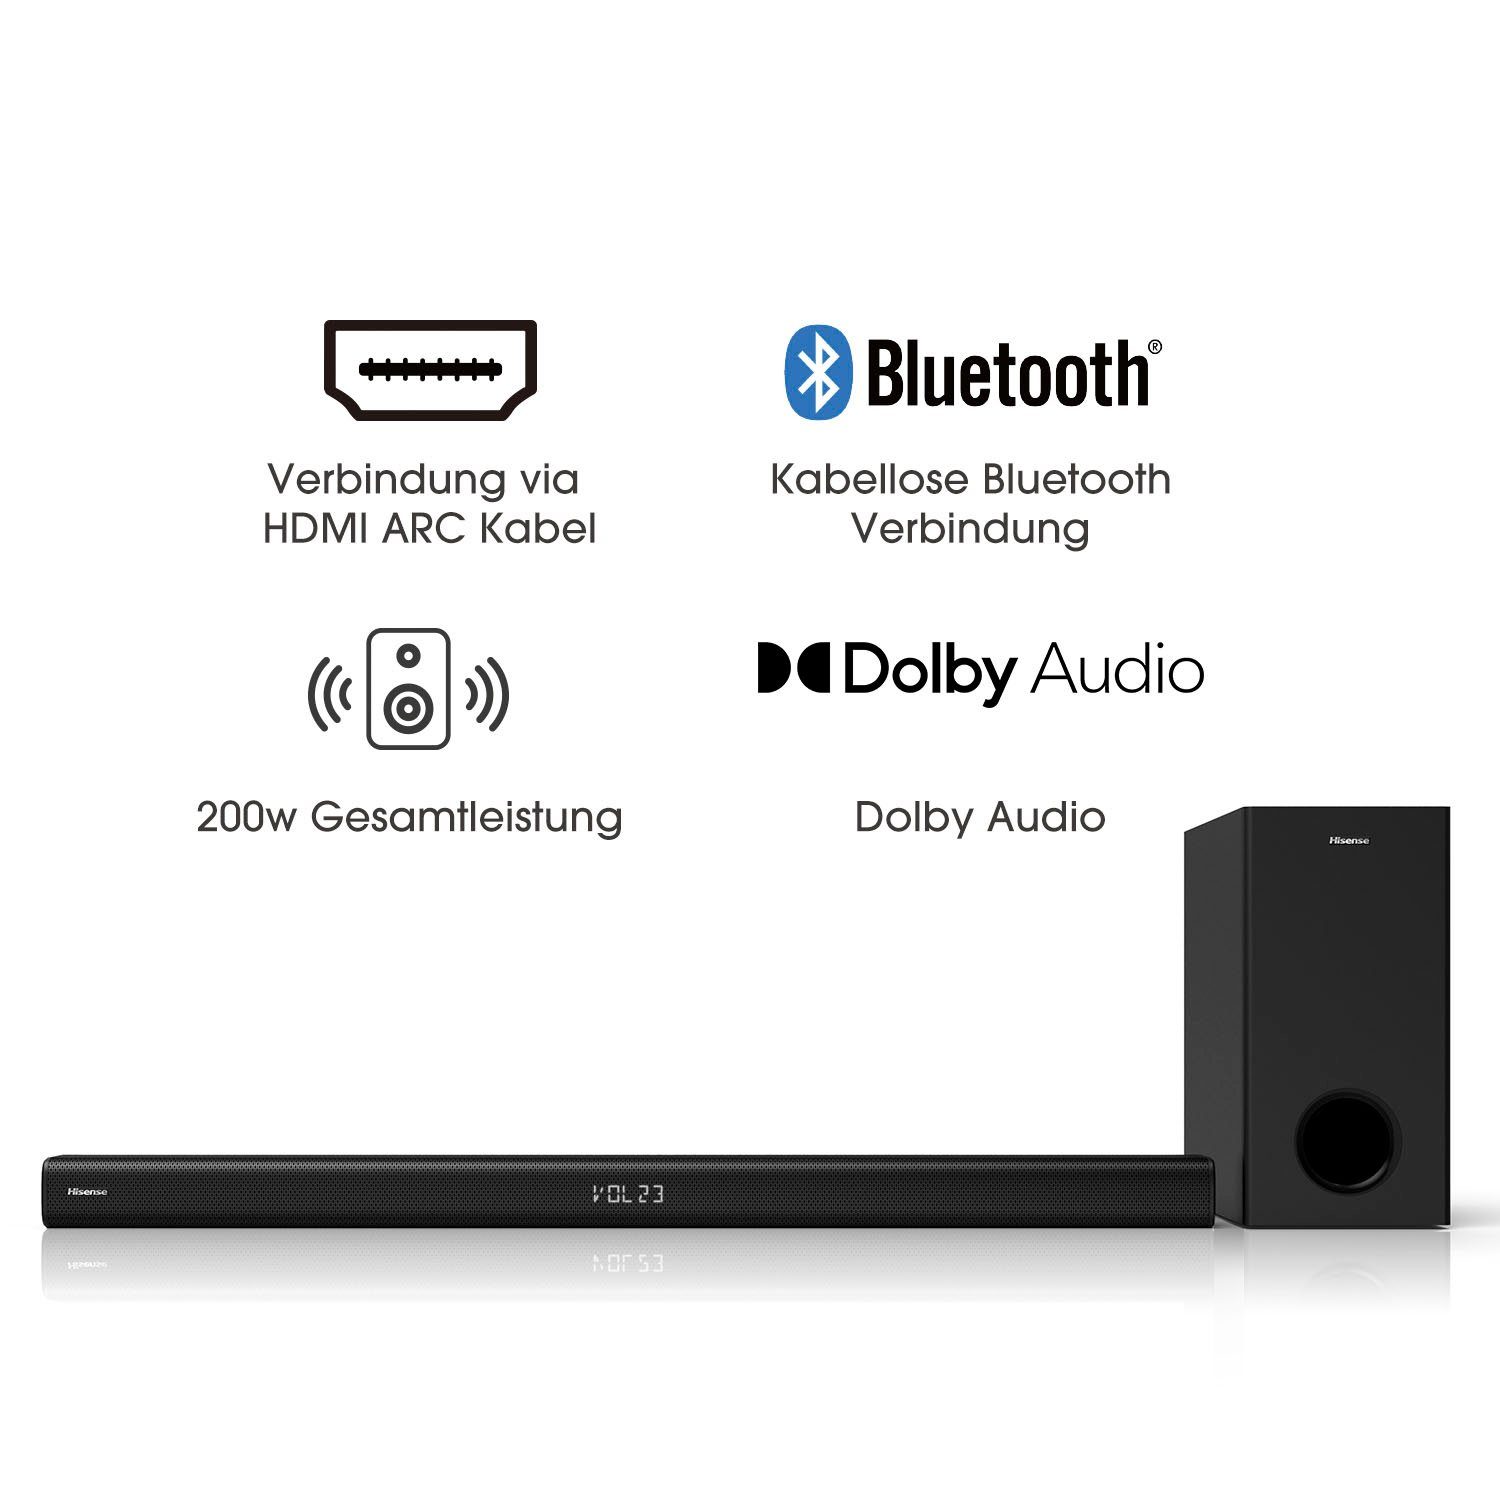 Home (Bluetooth, W, 200W, 200 Hisense Theater Subwoofer) Soundbar HS218 2.1 System,